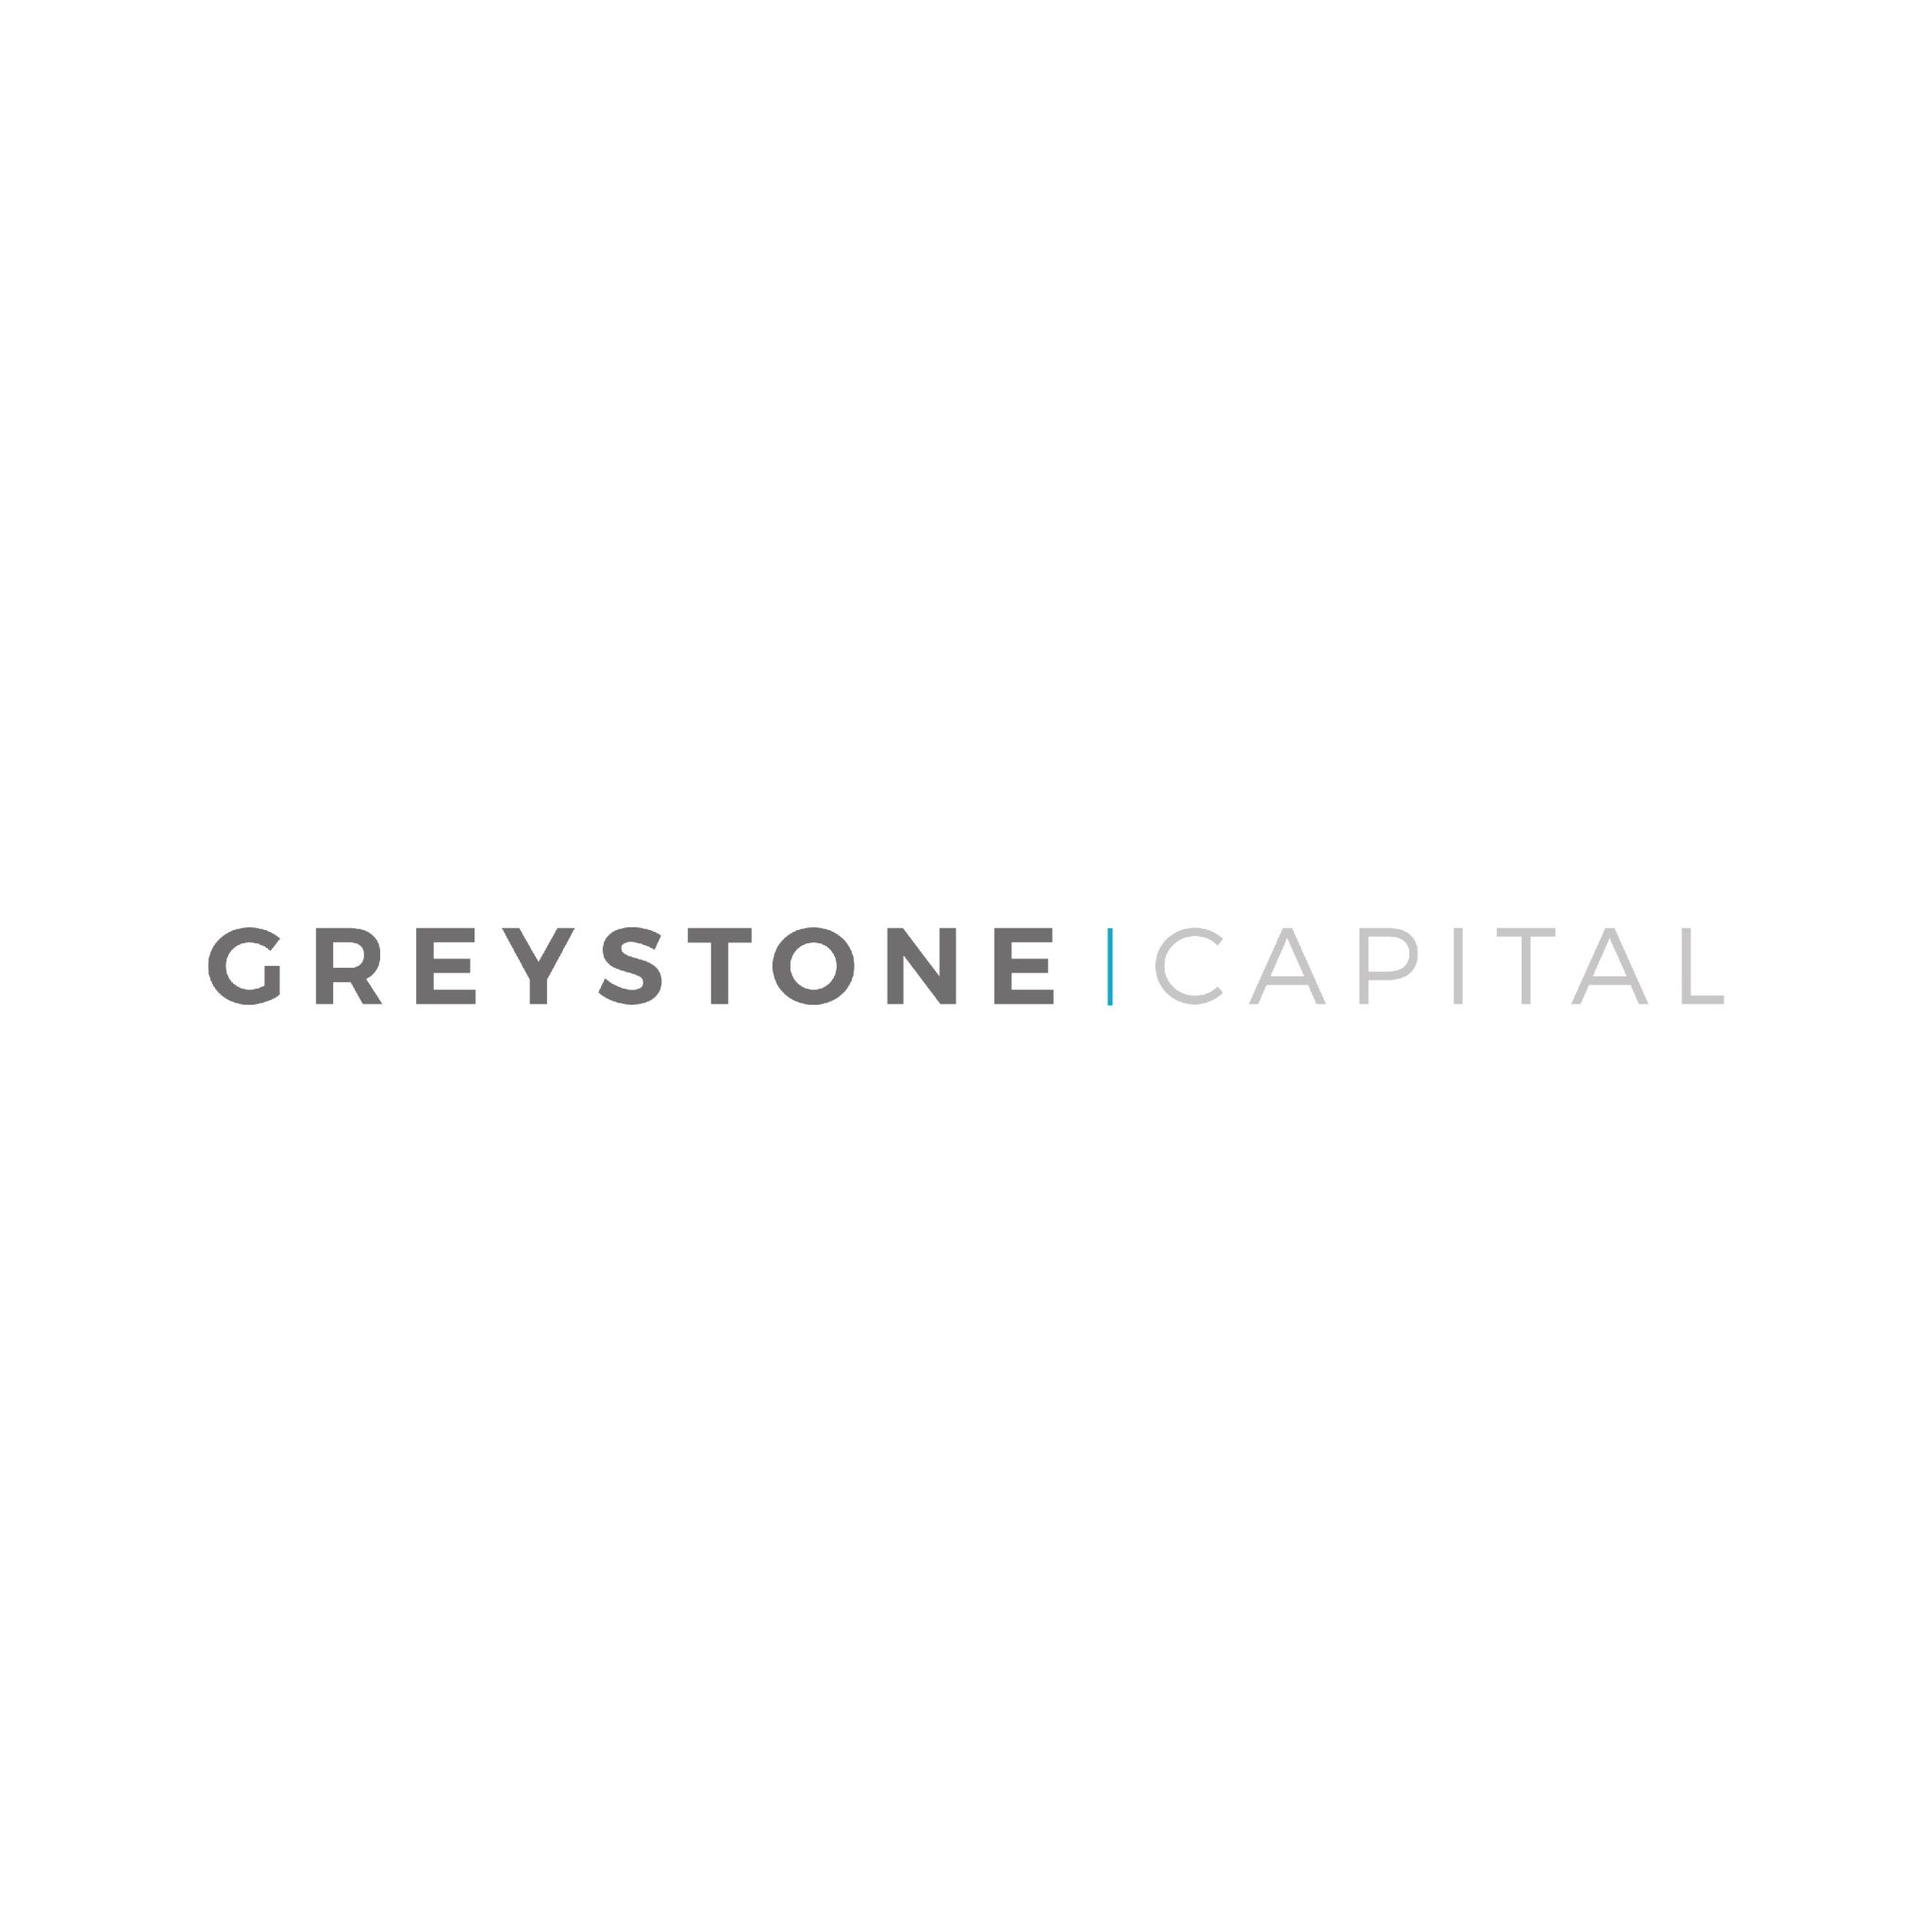 Greystone Capital